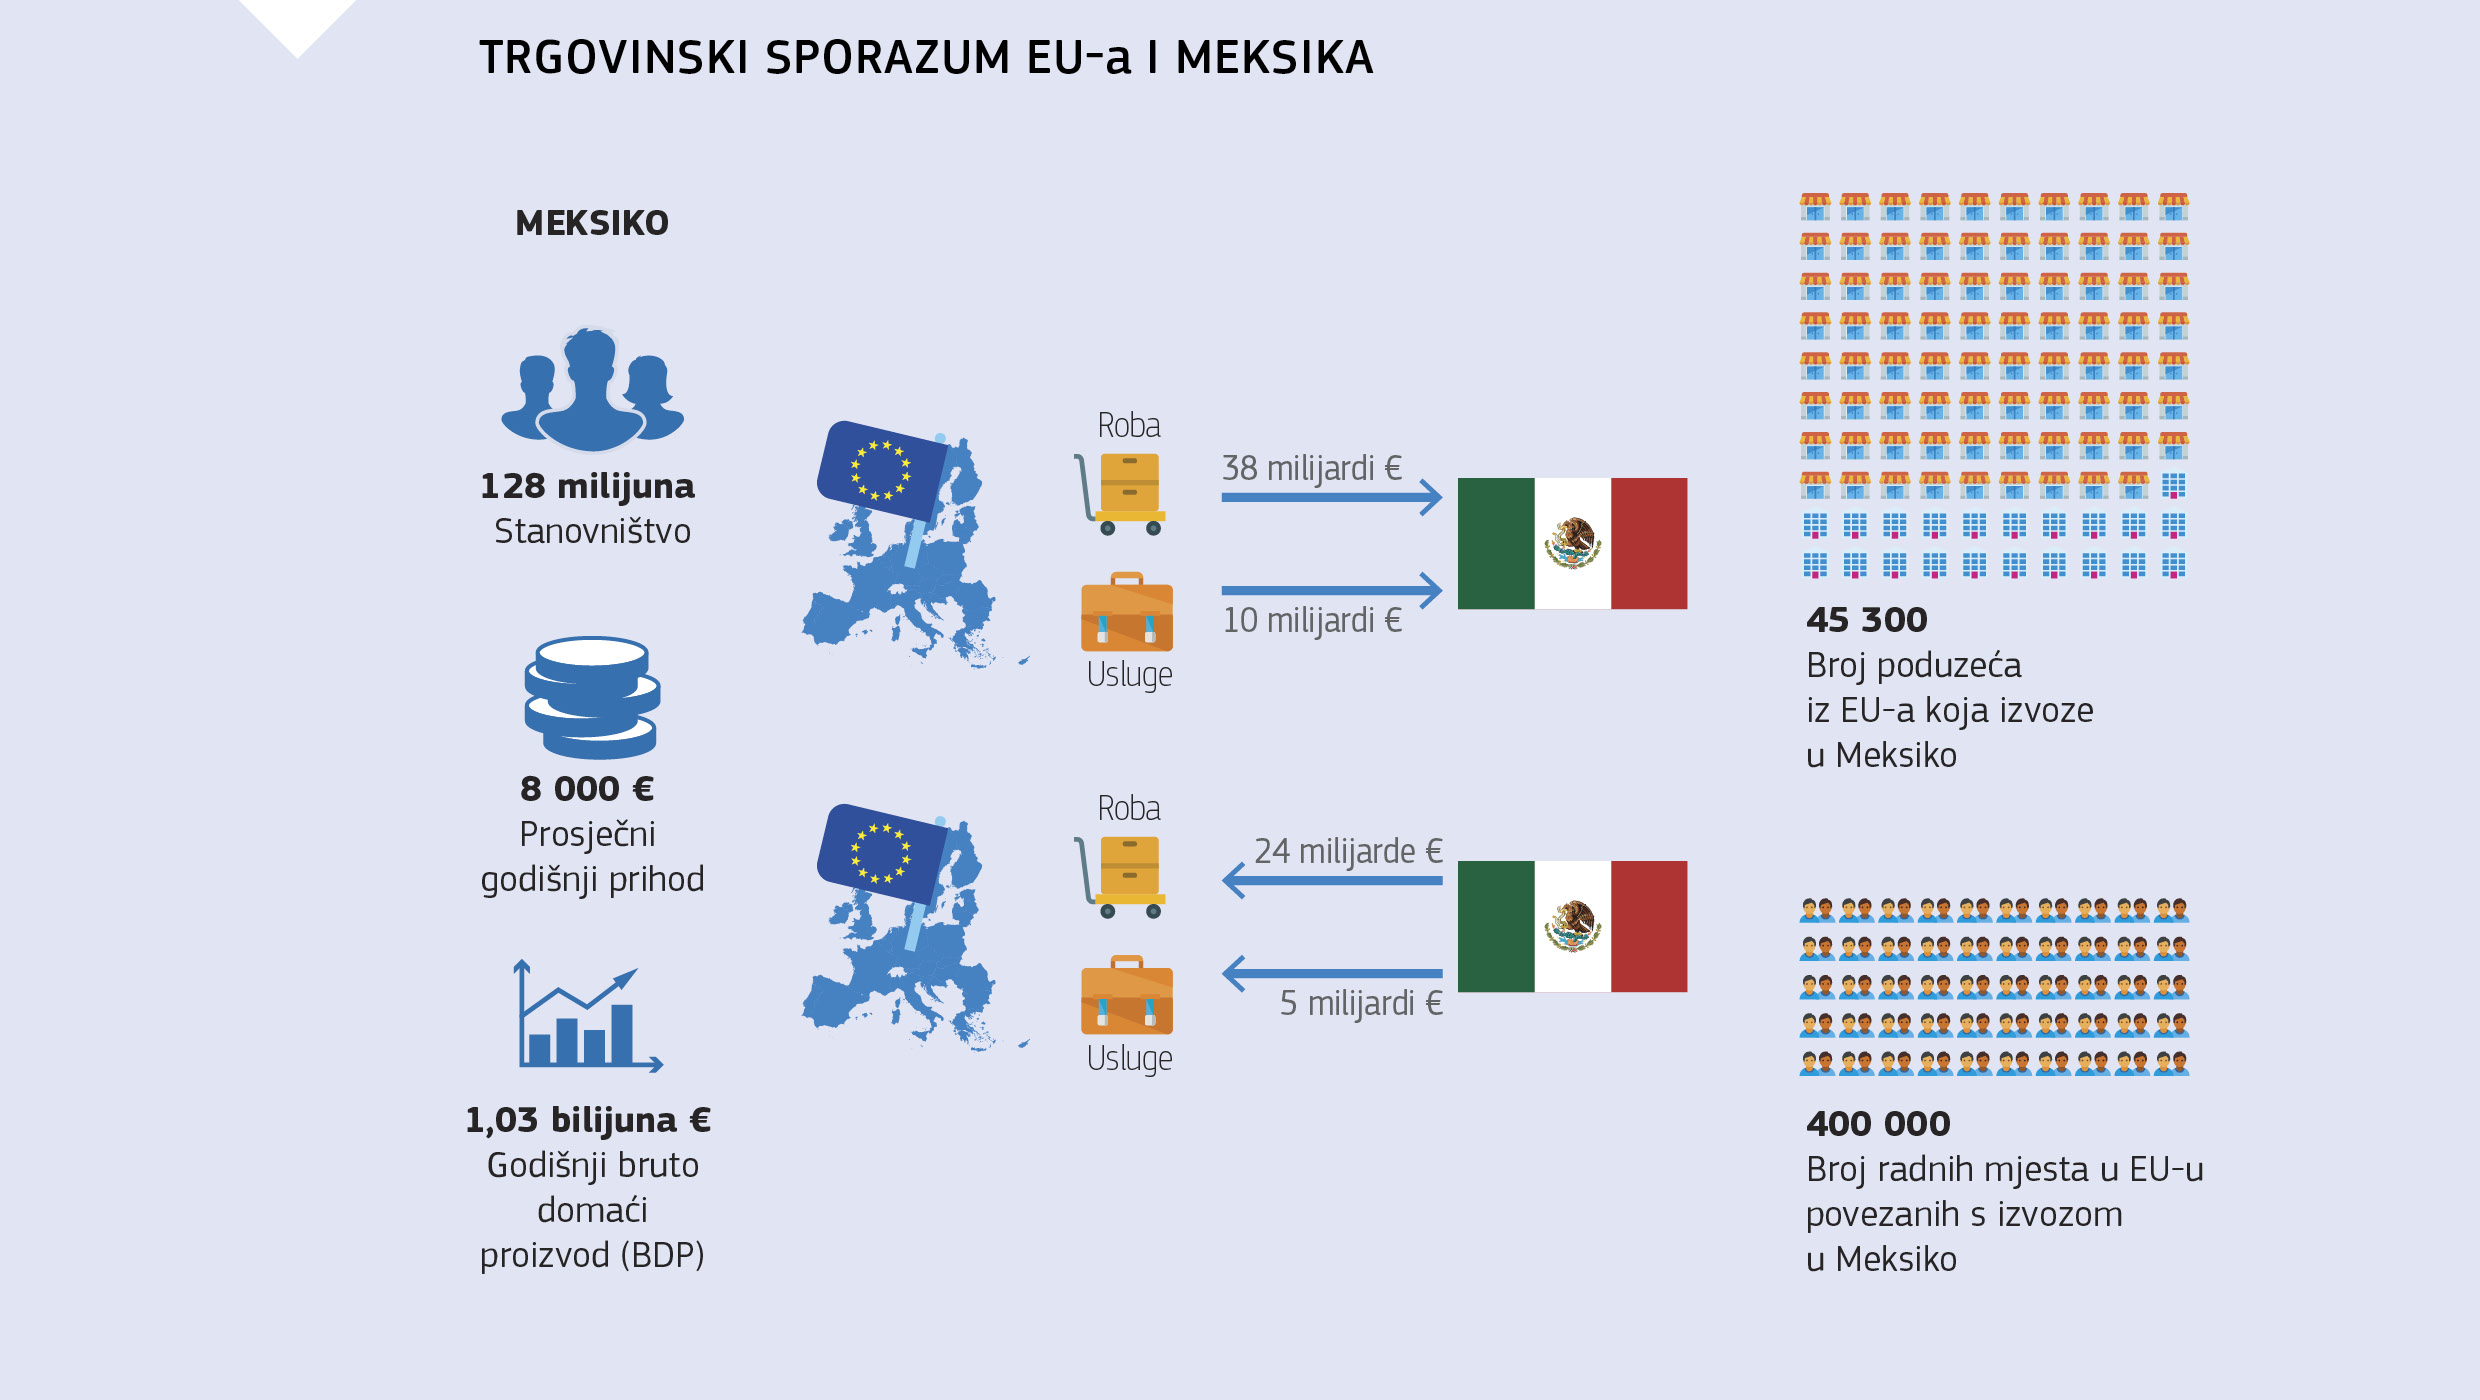 TRGOVINSKI SPORAZUM EU-a I MEKSIKA